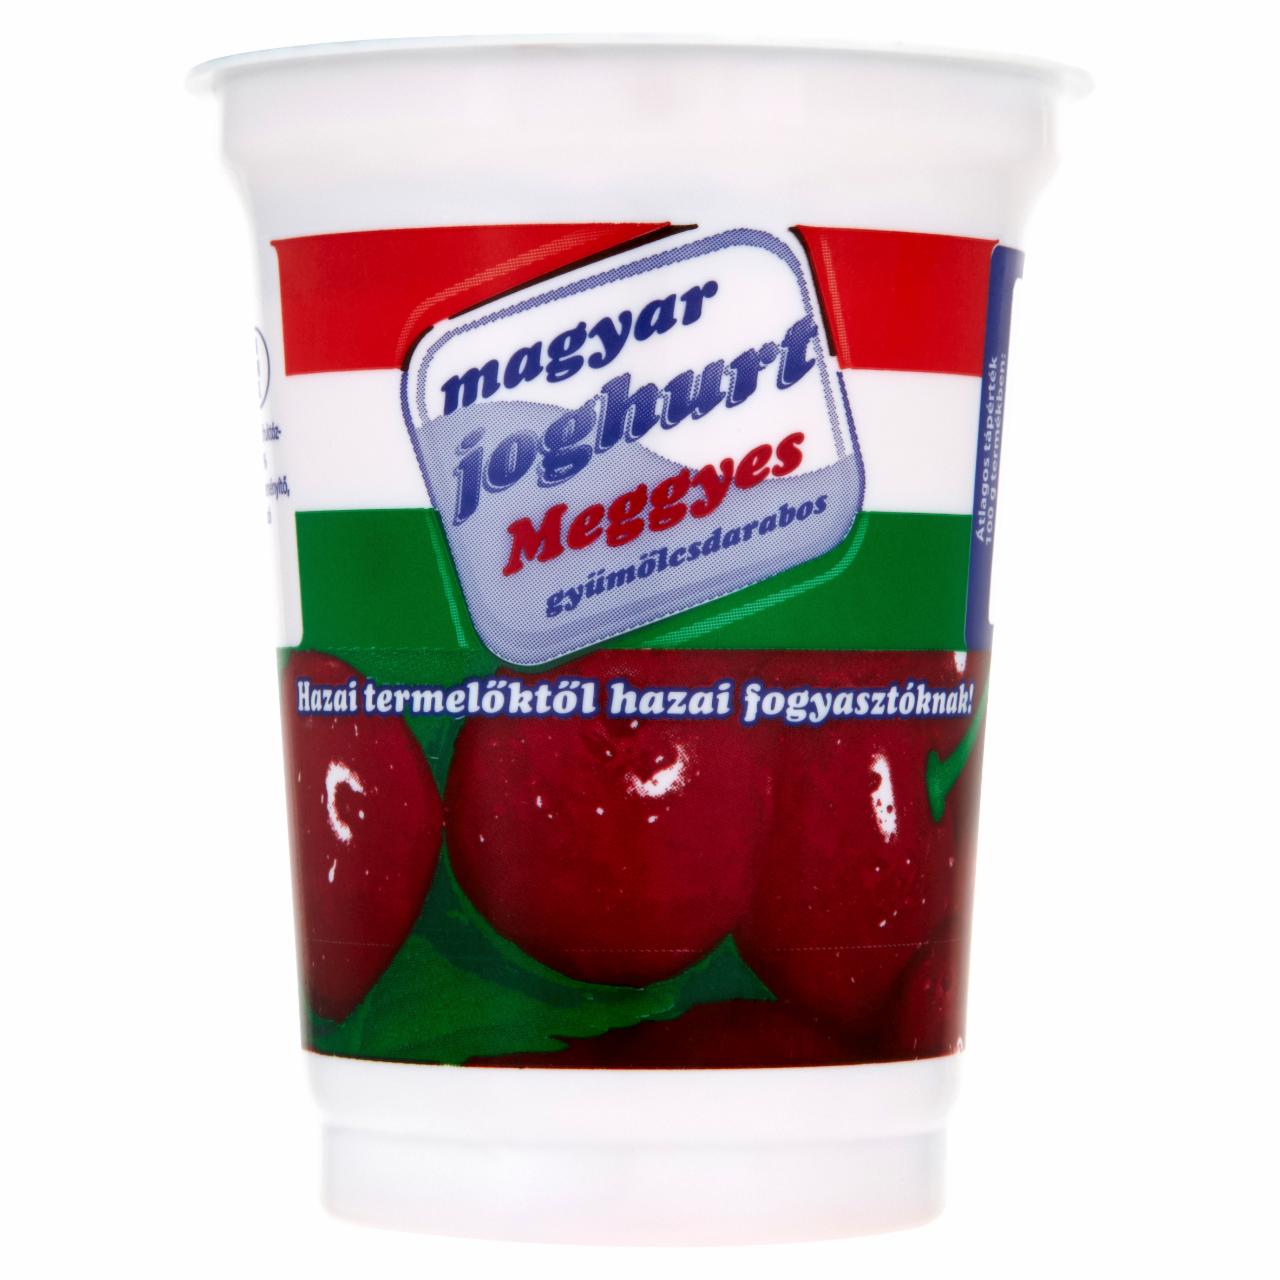 Képek - Magyar Joghurt meggyes gyümölcsdarabos joghurt 450 g